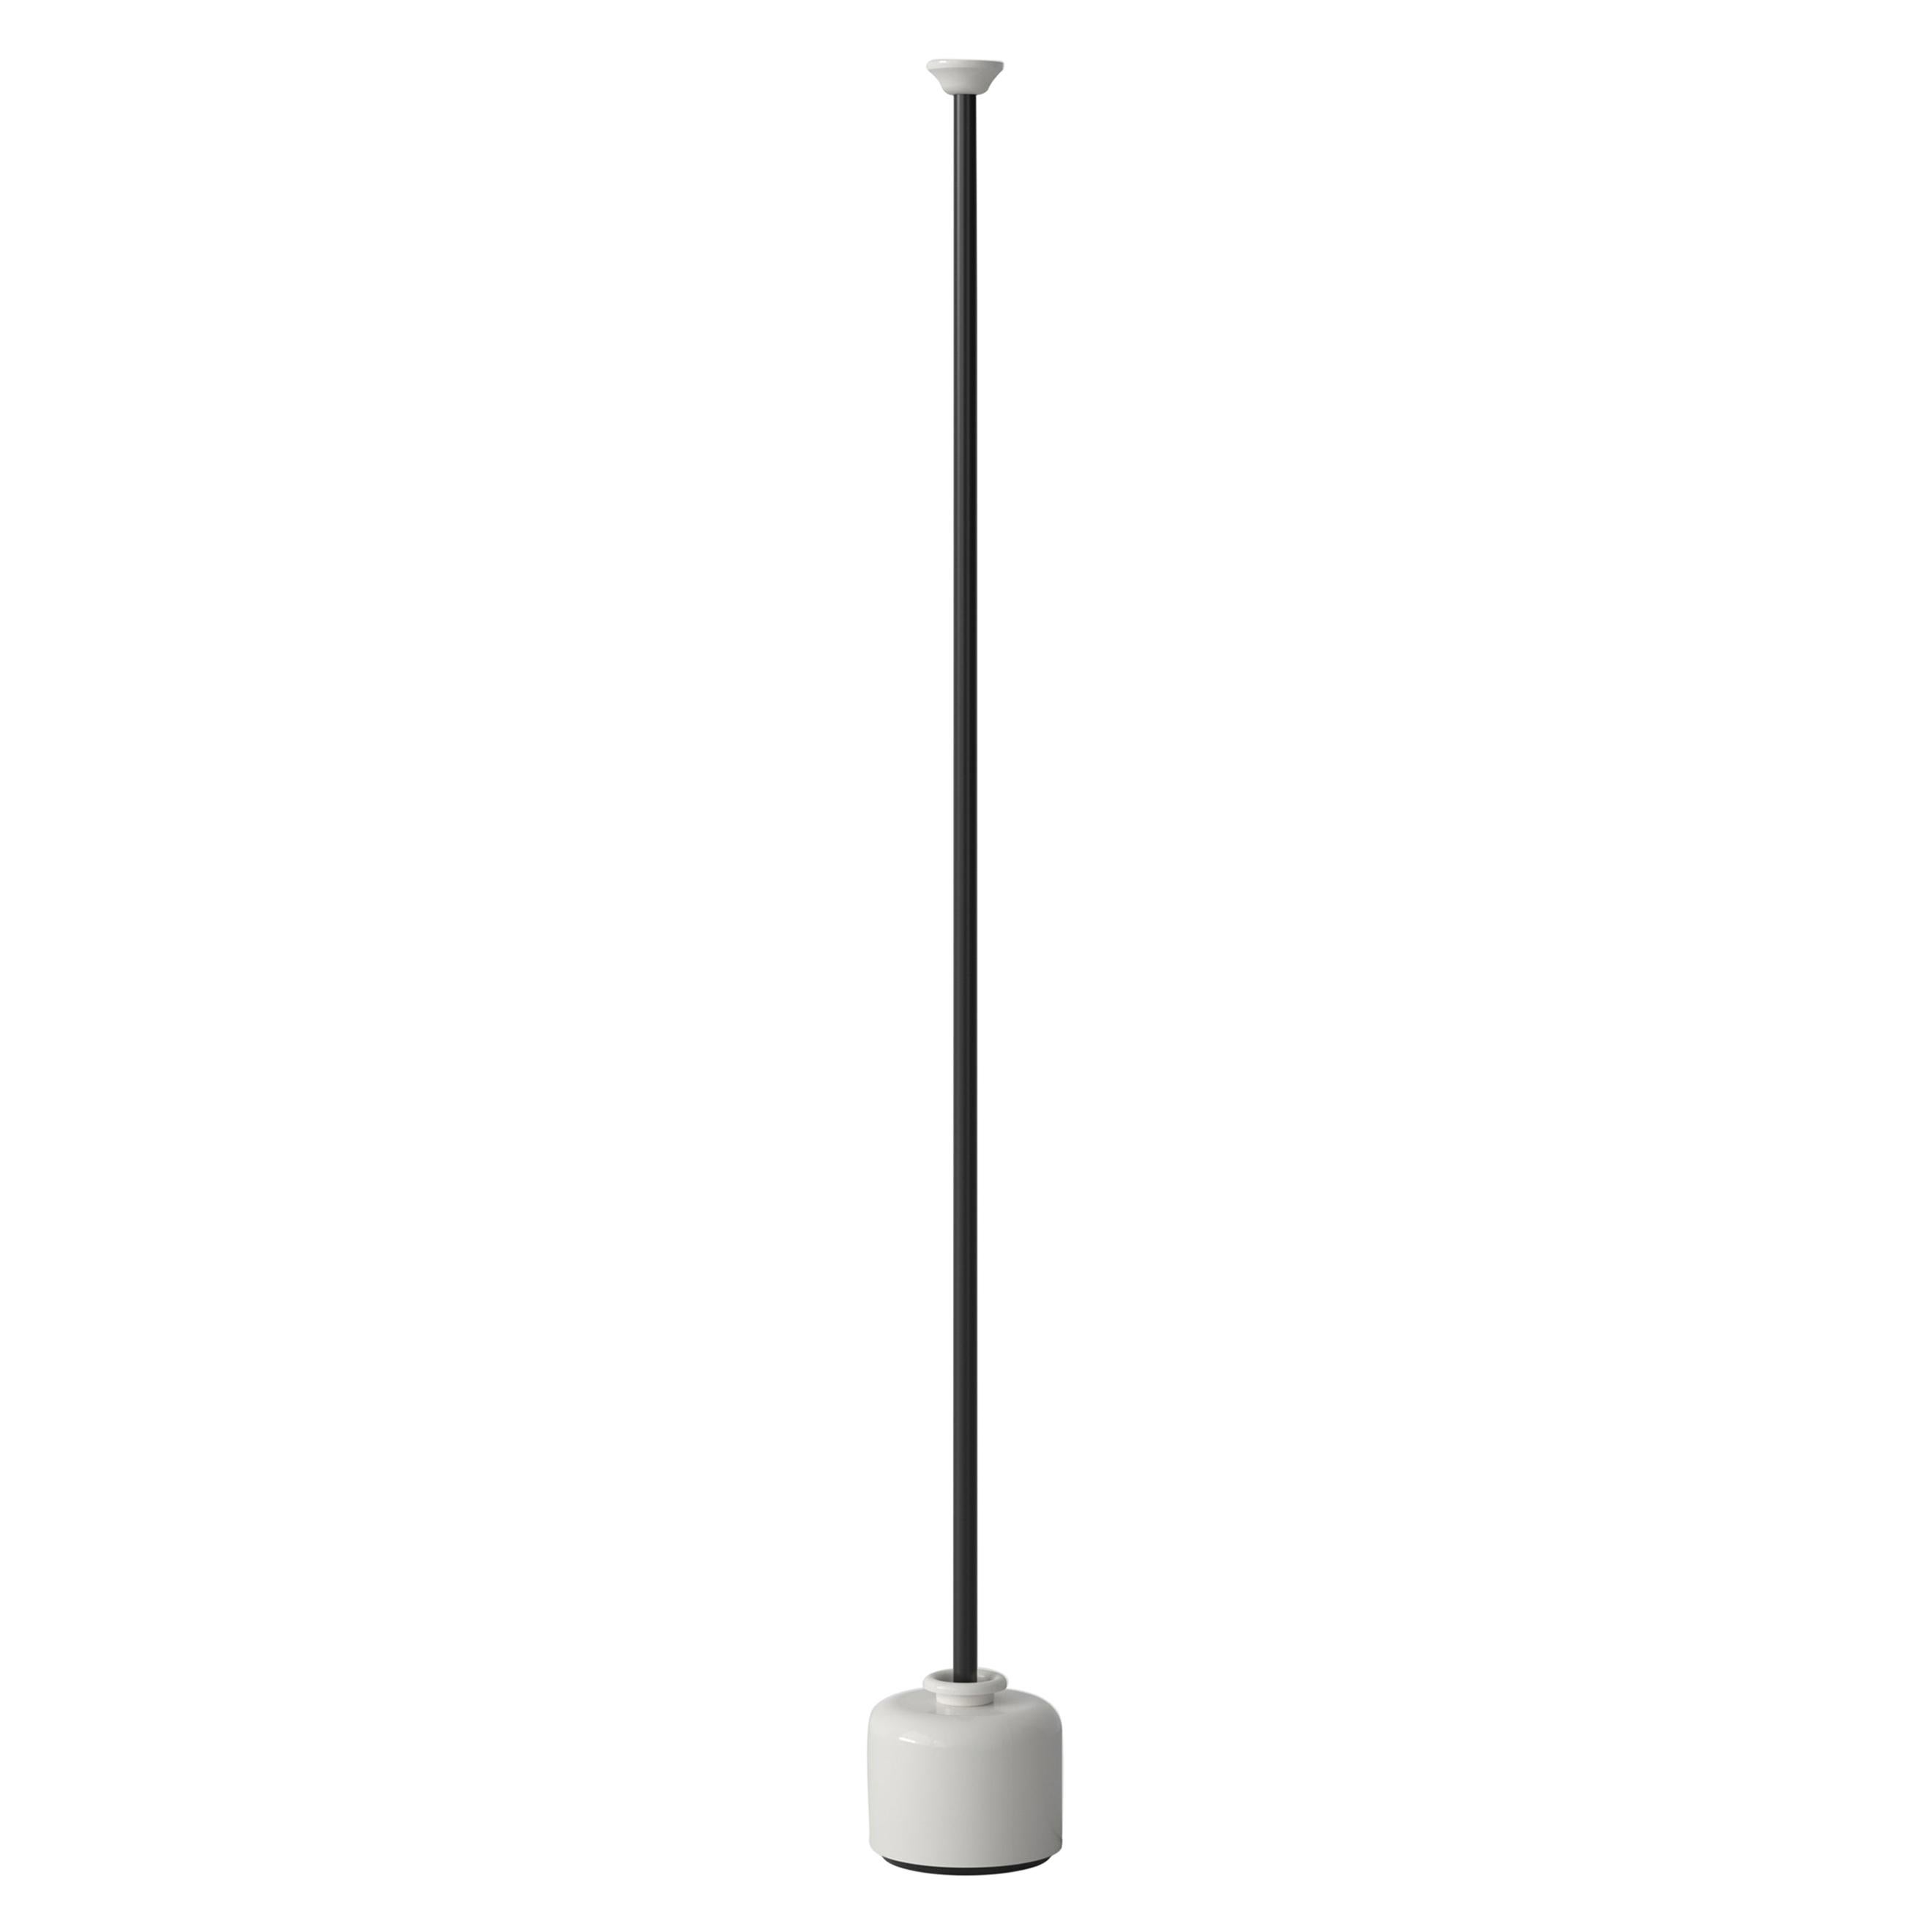 Gino Sarfatti Lamp Model 1095 For Sale